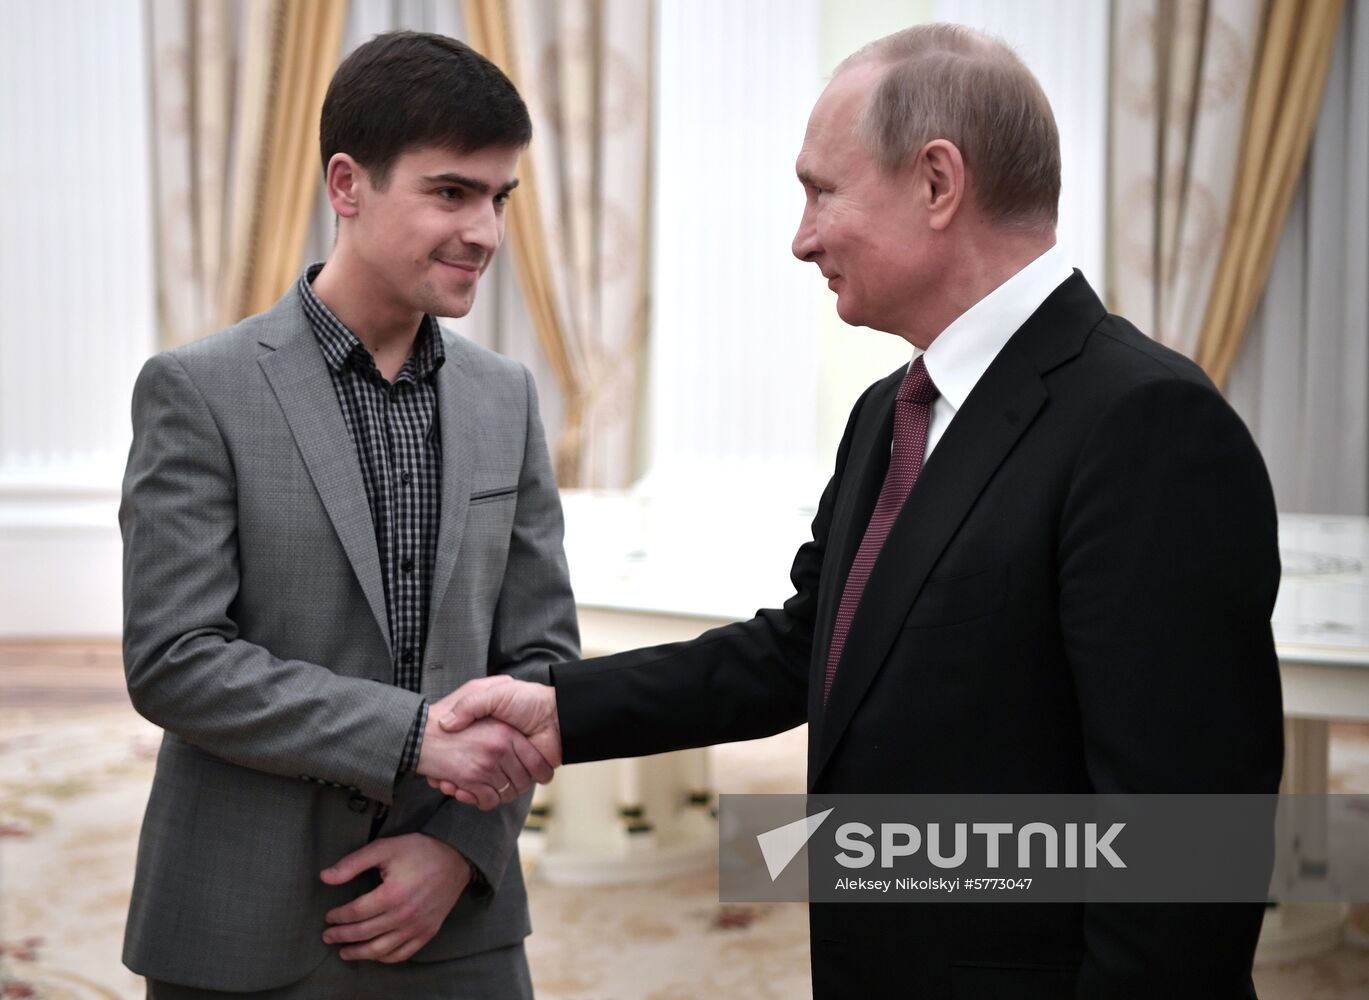 Vladimir Putin meets with 2019 Nemaly Business Prize winners